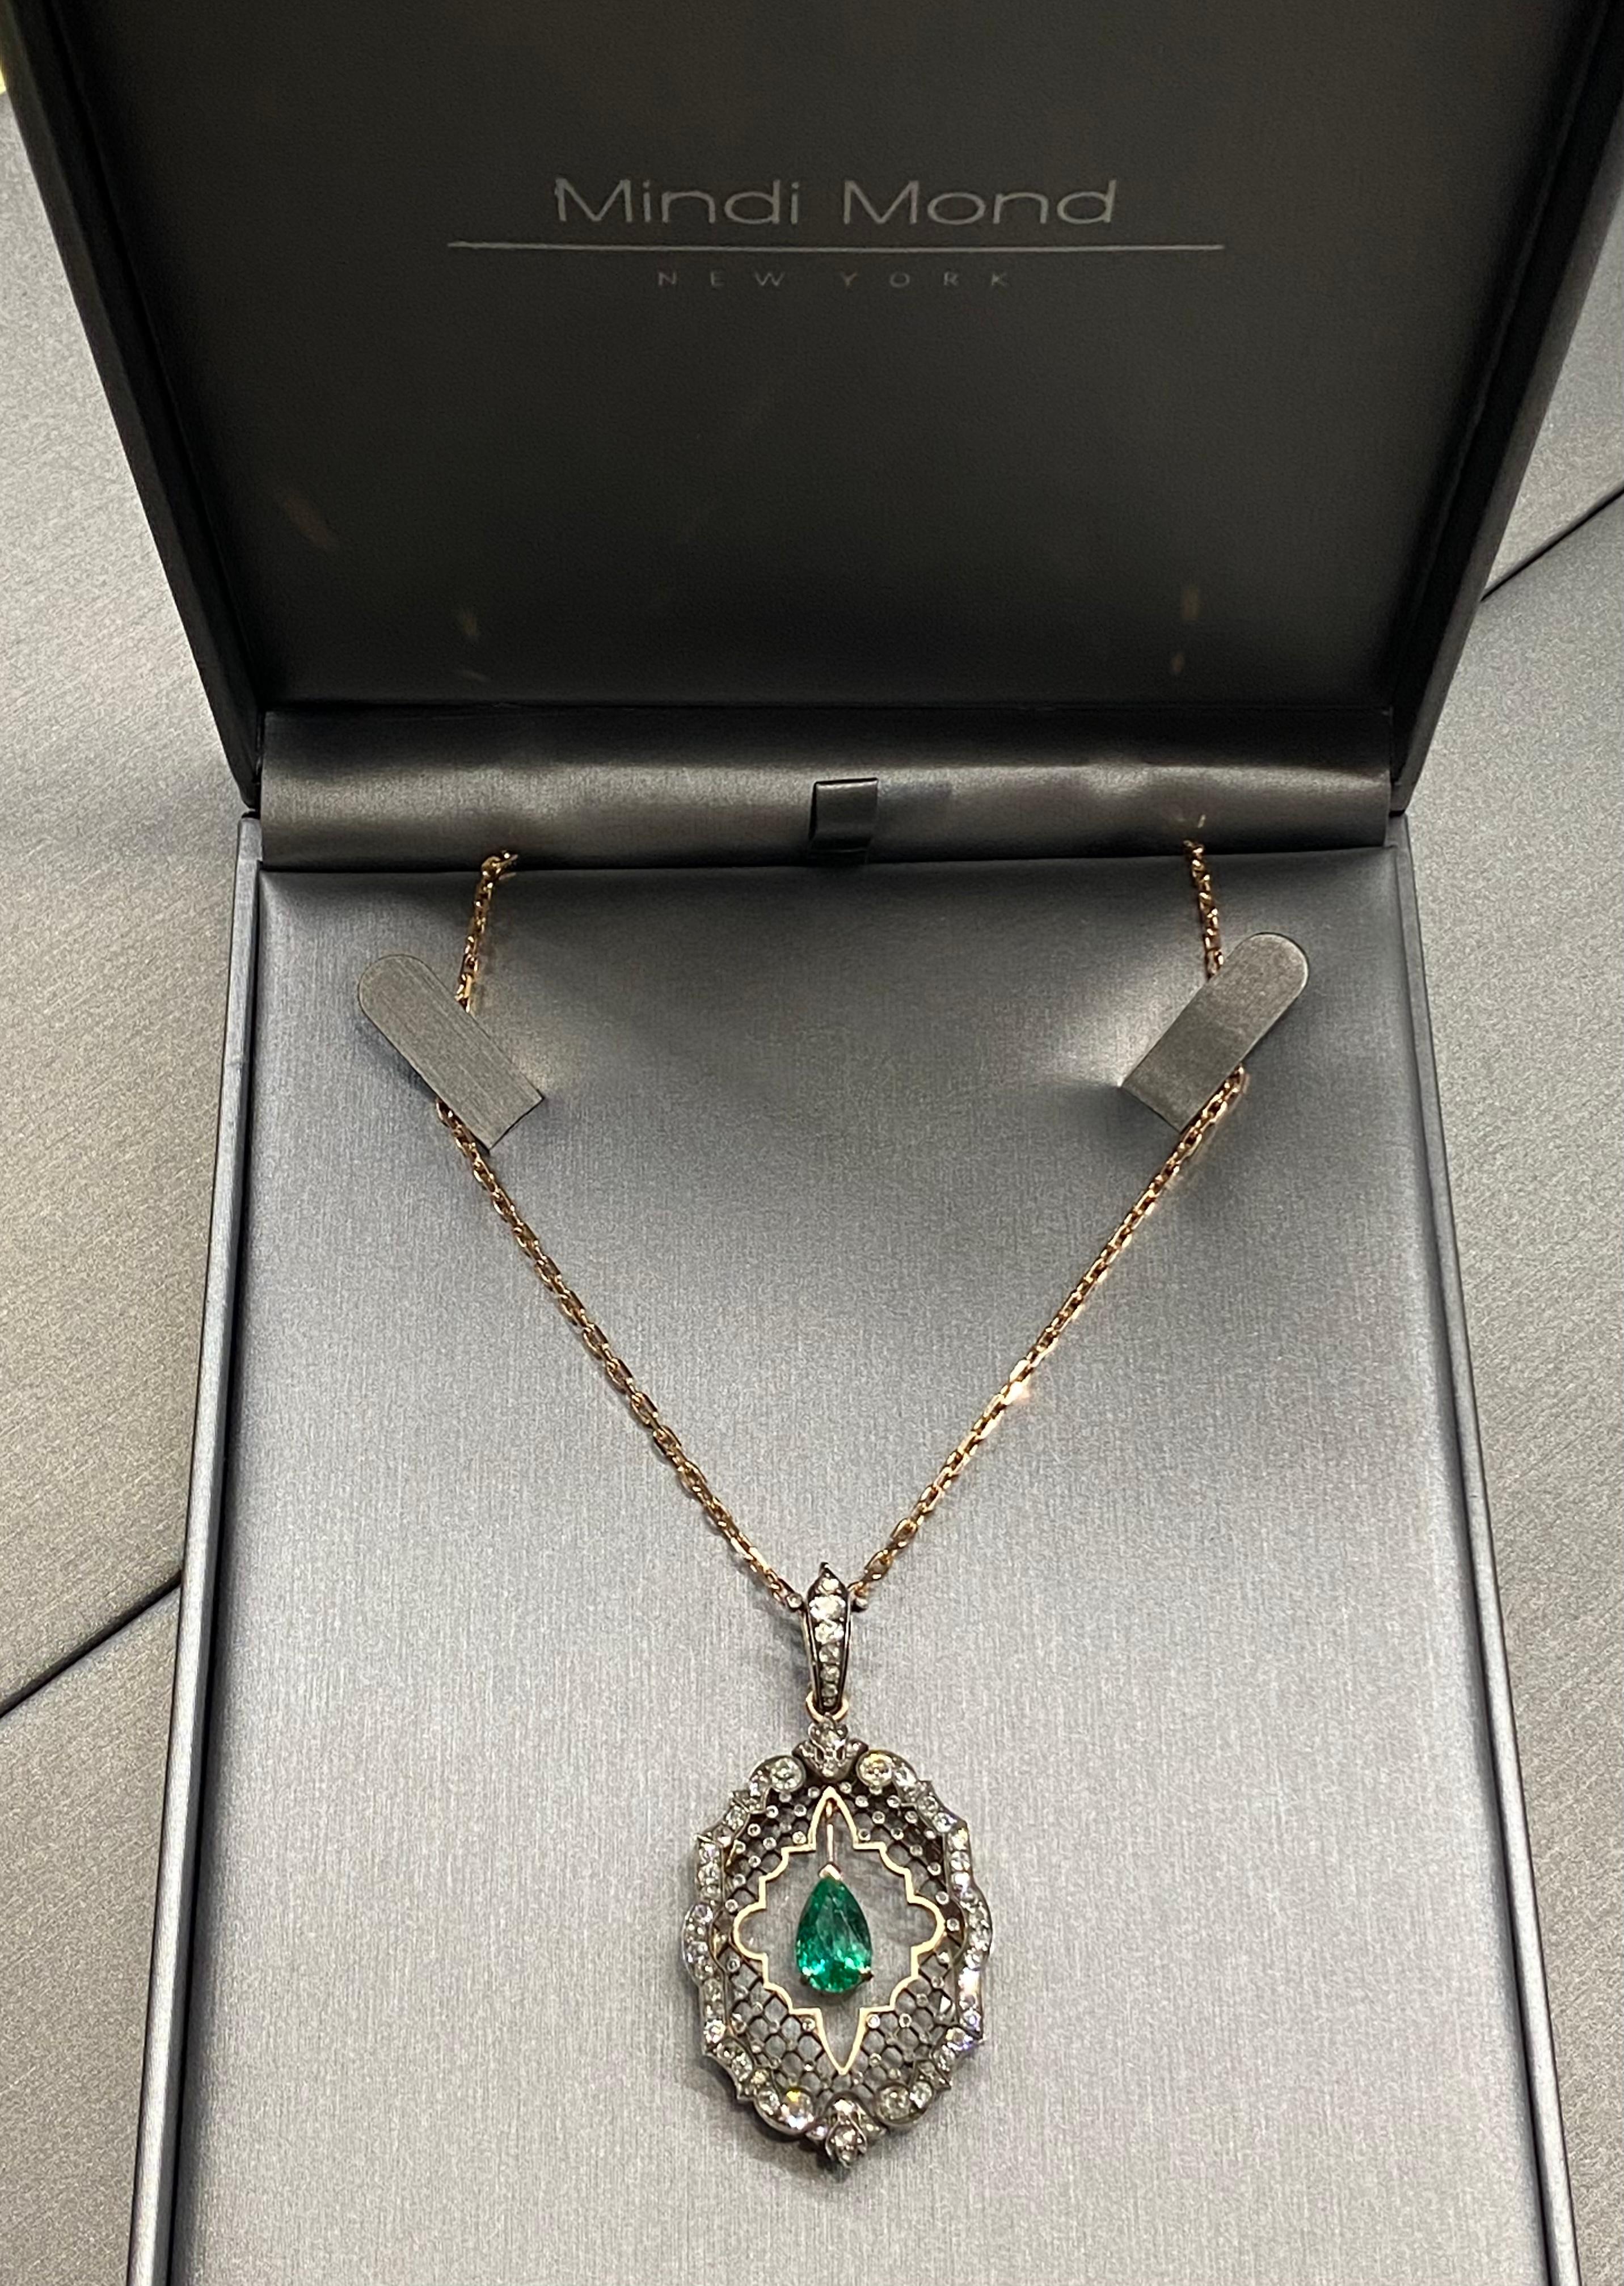 Mindi Mond AGL Certified 2.31 Carat Colombian Emerald Diamond Victorian Pendant For Sale 3